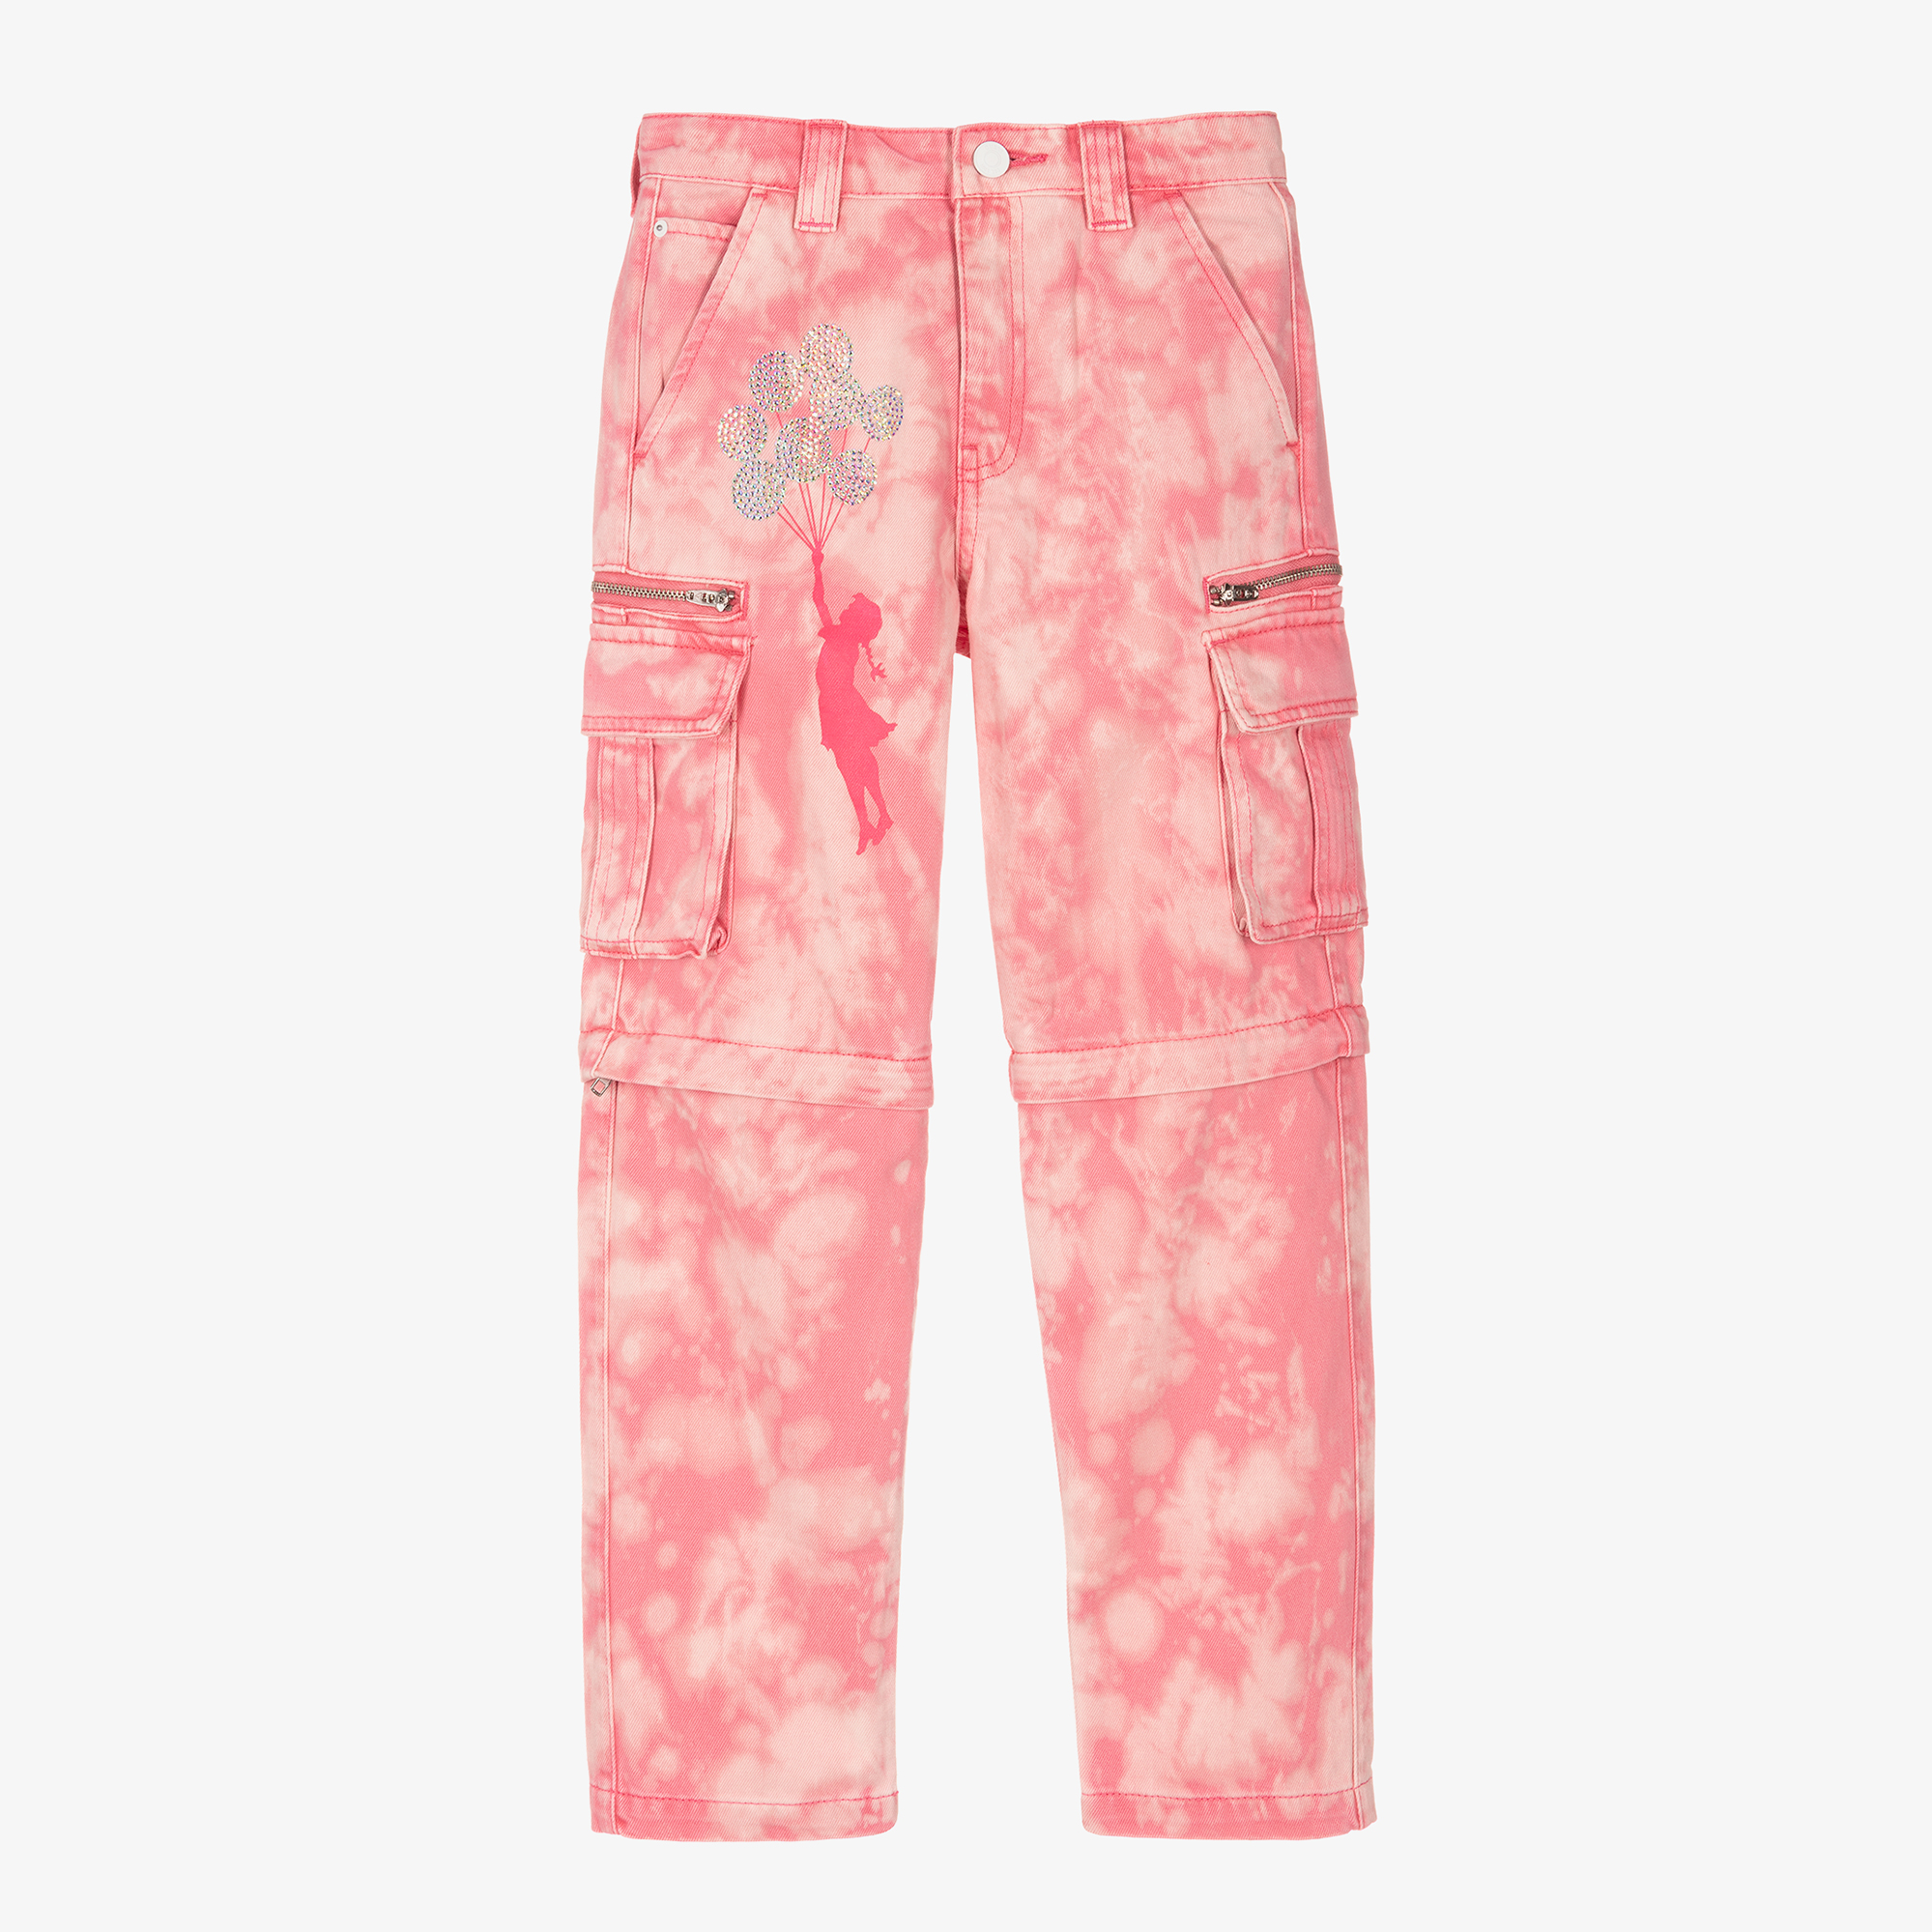 https://www.childrensalonoutlet.com/media/catalog/product/g/u/guess-teen-girls-pink-banksy-cargo-jeans-498403-939d423ed9b2543f8d8002431badf73024b0d7a9.jpg